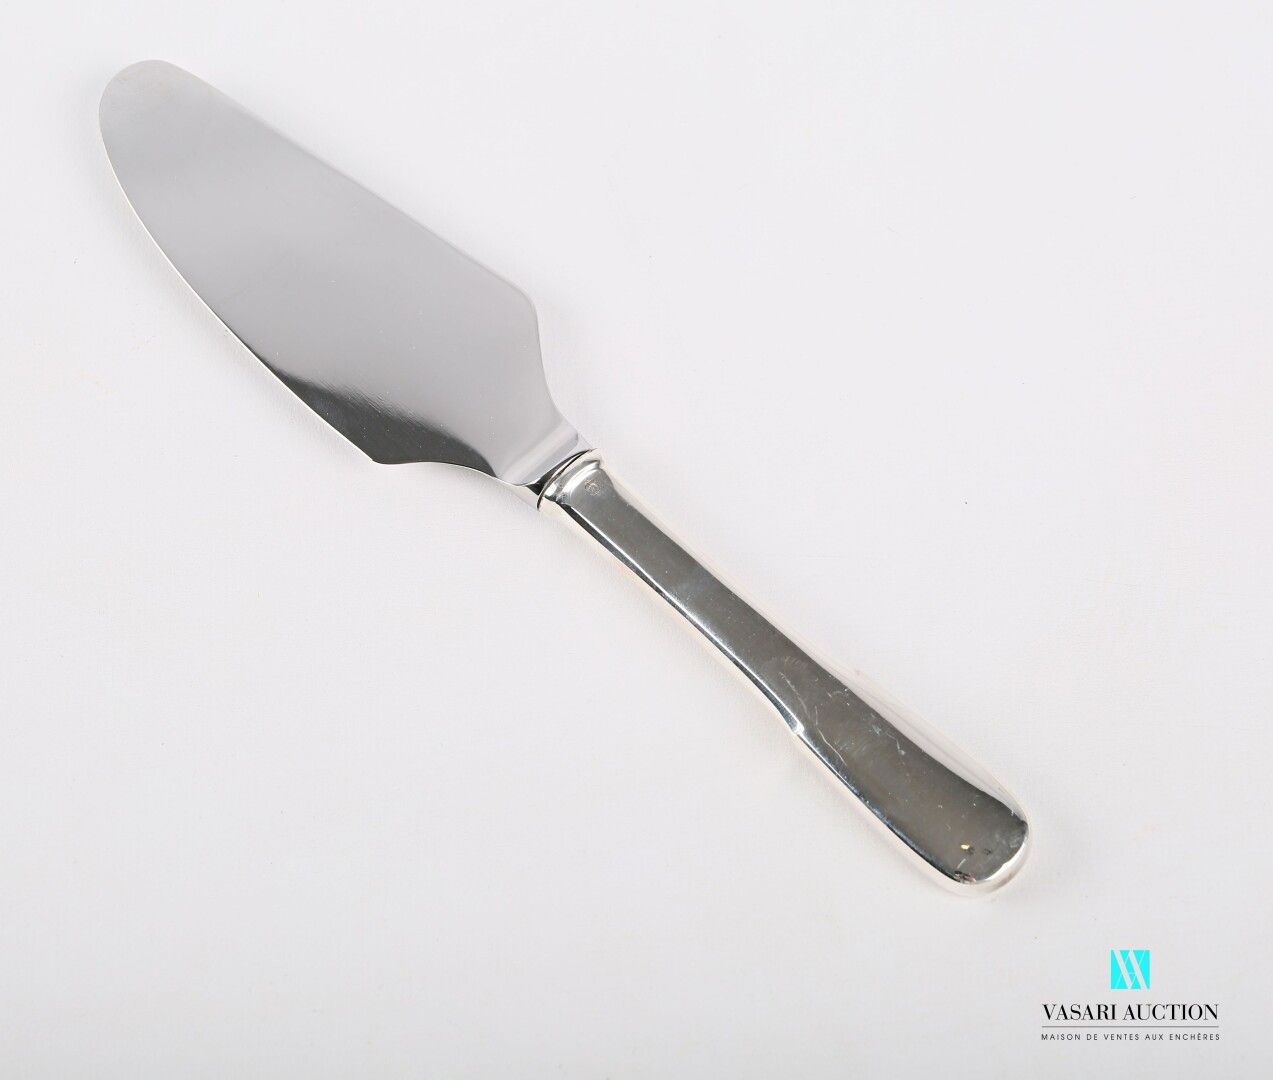 Null 饼架，手柄为银色，带平面装饰，刀片为不锈钢材质

毛重 : 127,40 g